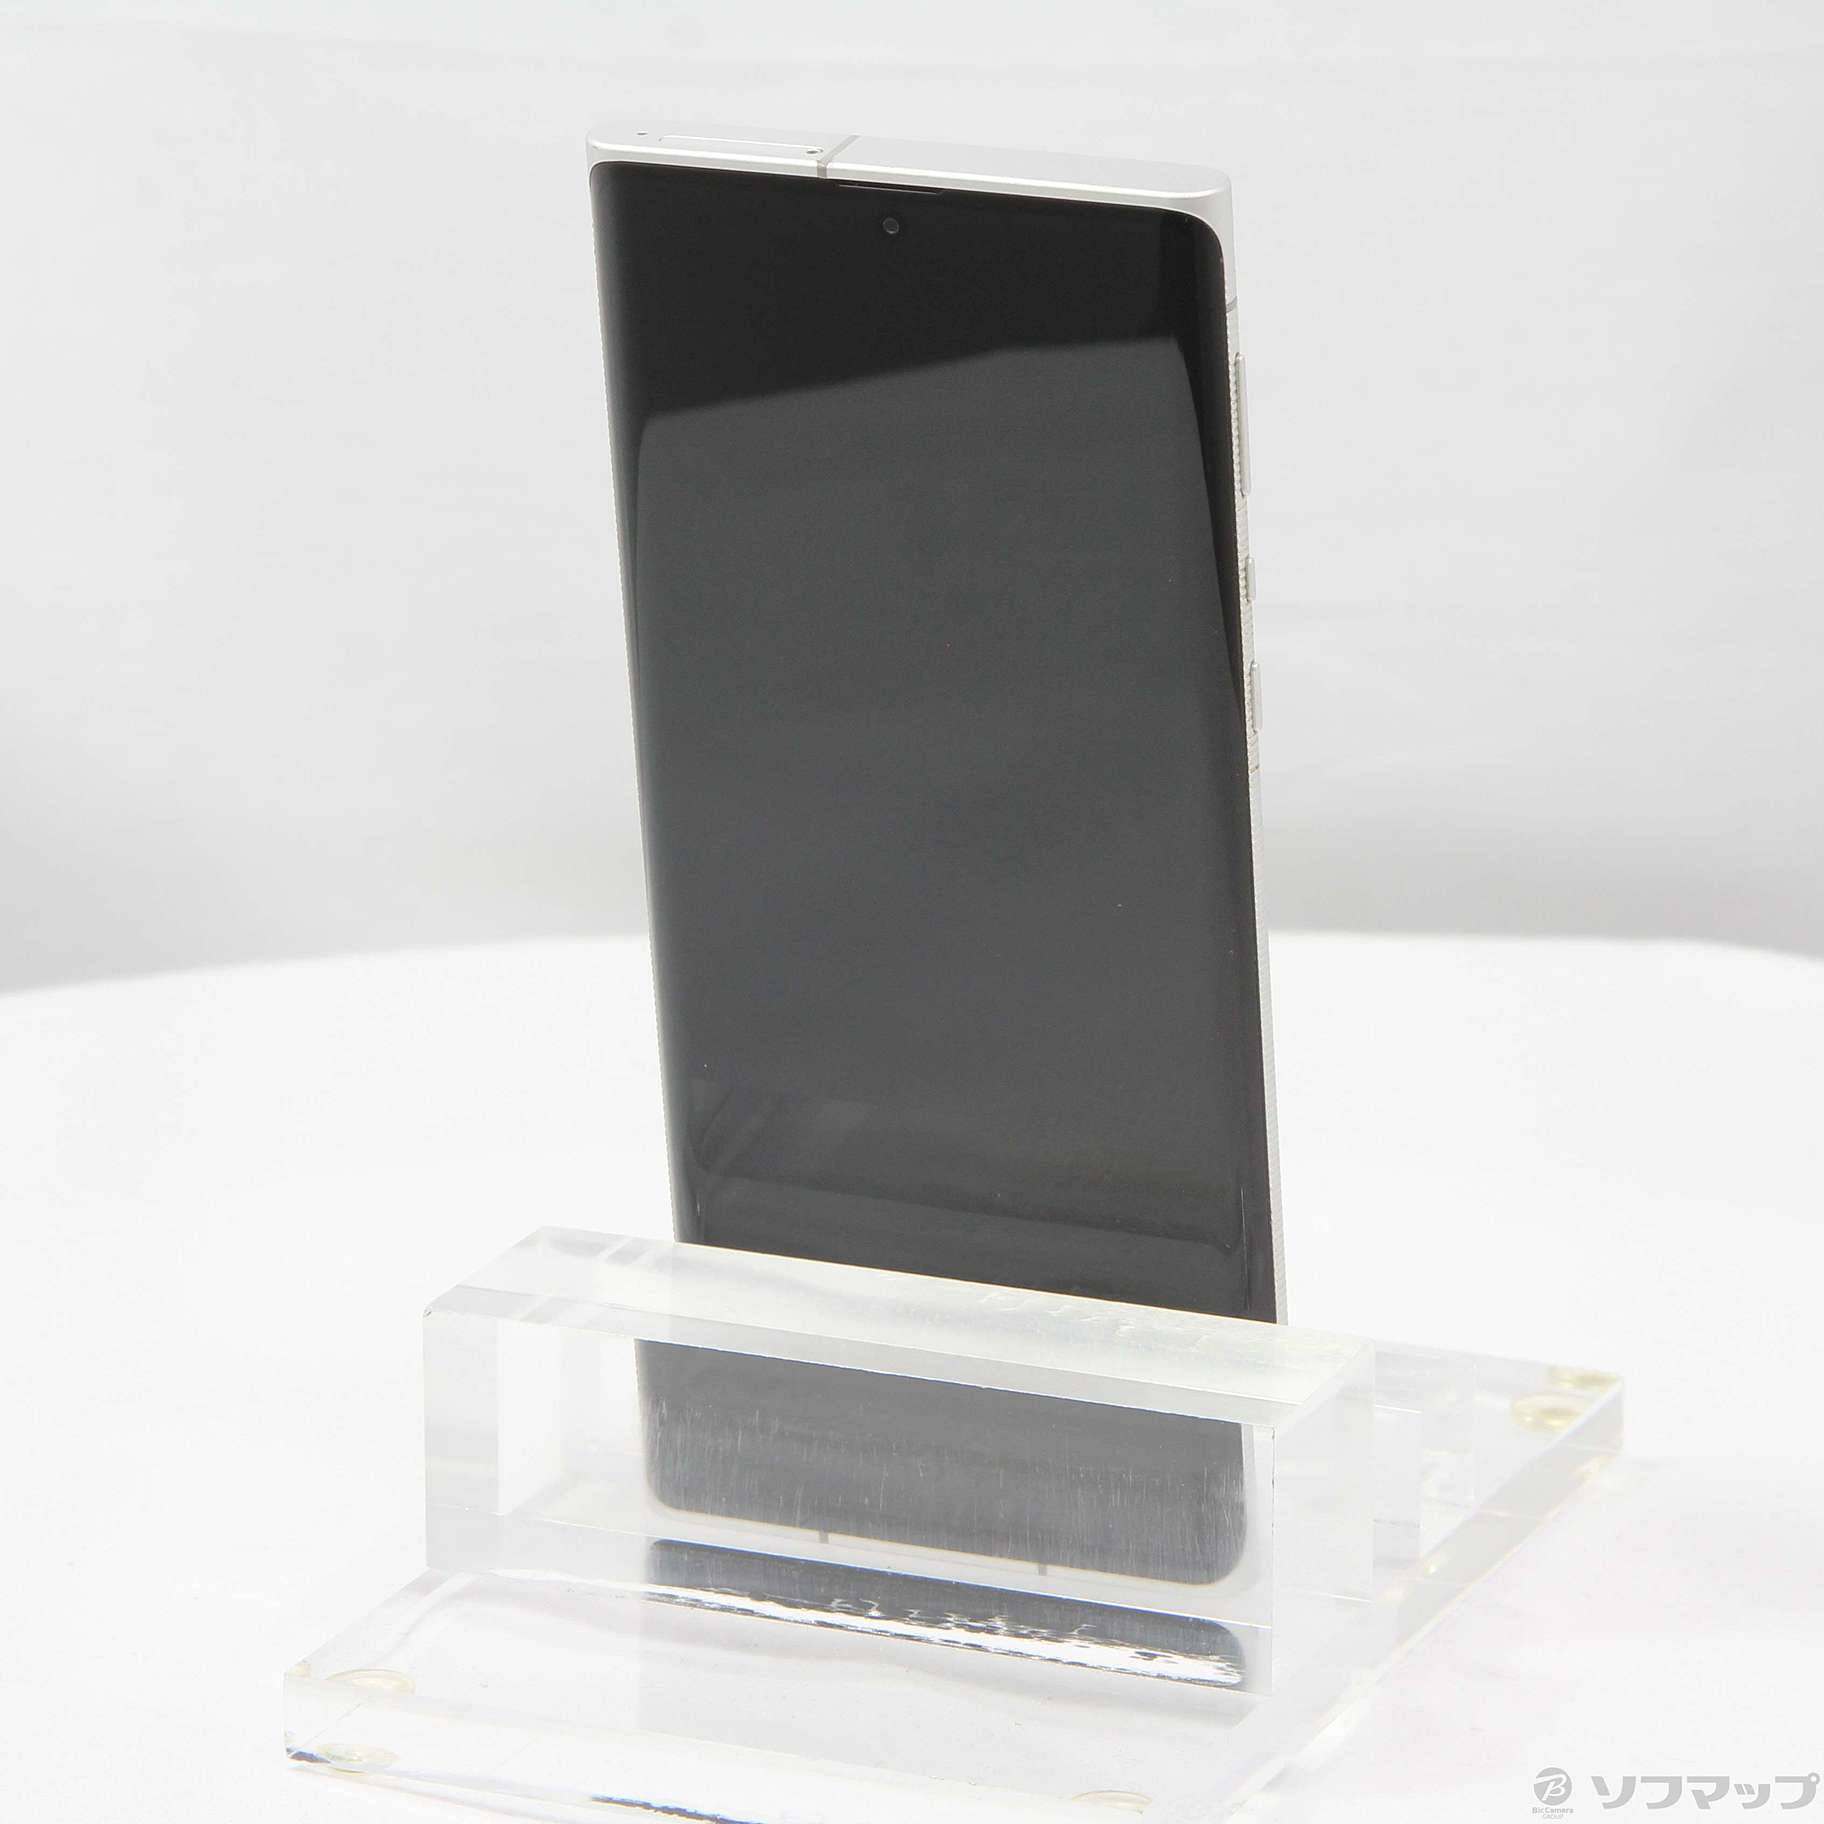 Leitz Phone 1 256GB ライカシルバー LP-01 SoftBank